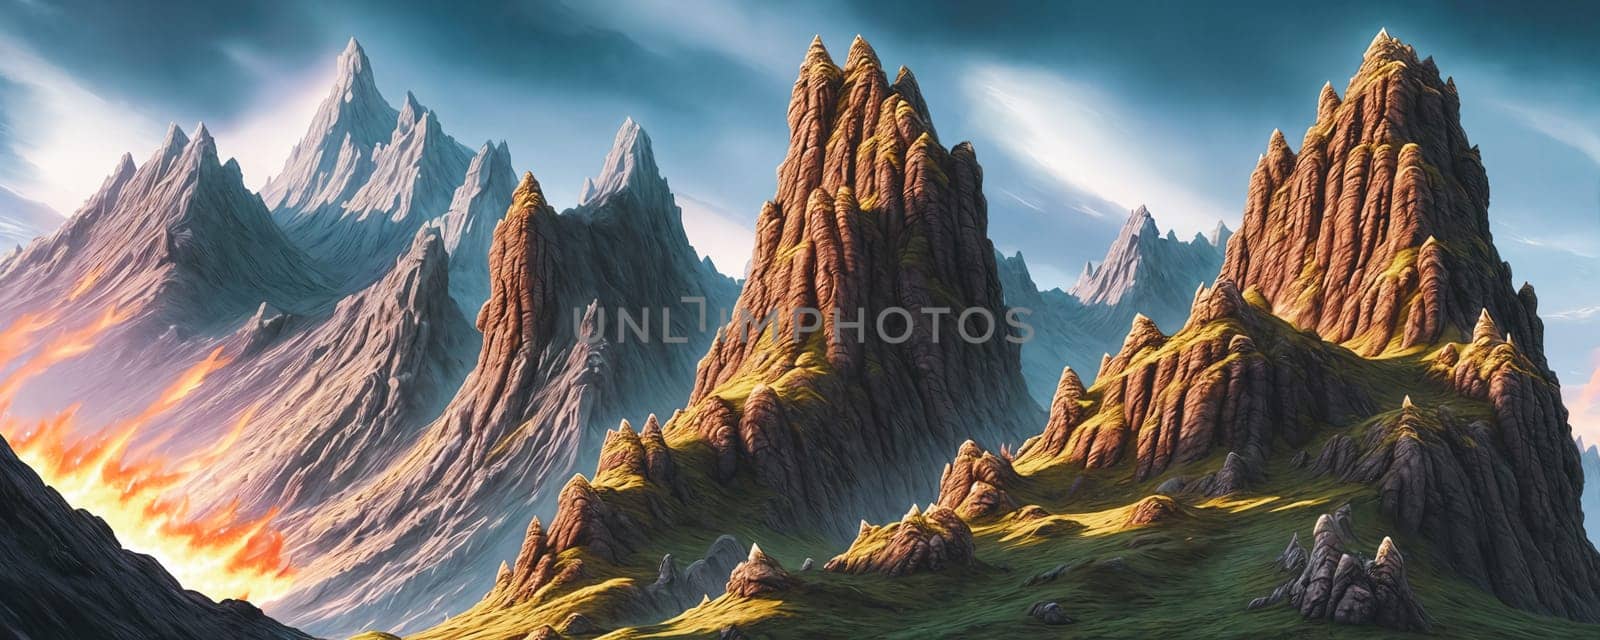 Dragons lair. Rugged grandeur of towering mountains, fierce crags, and treacherous cliffs. by GoodOlga